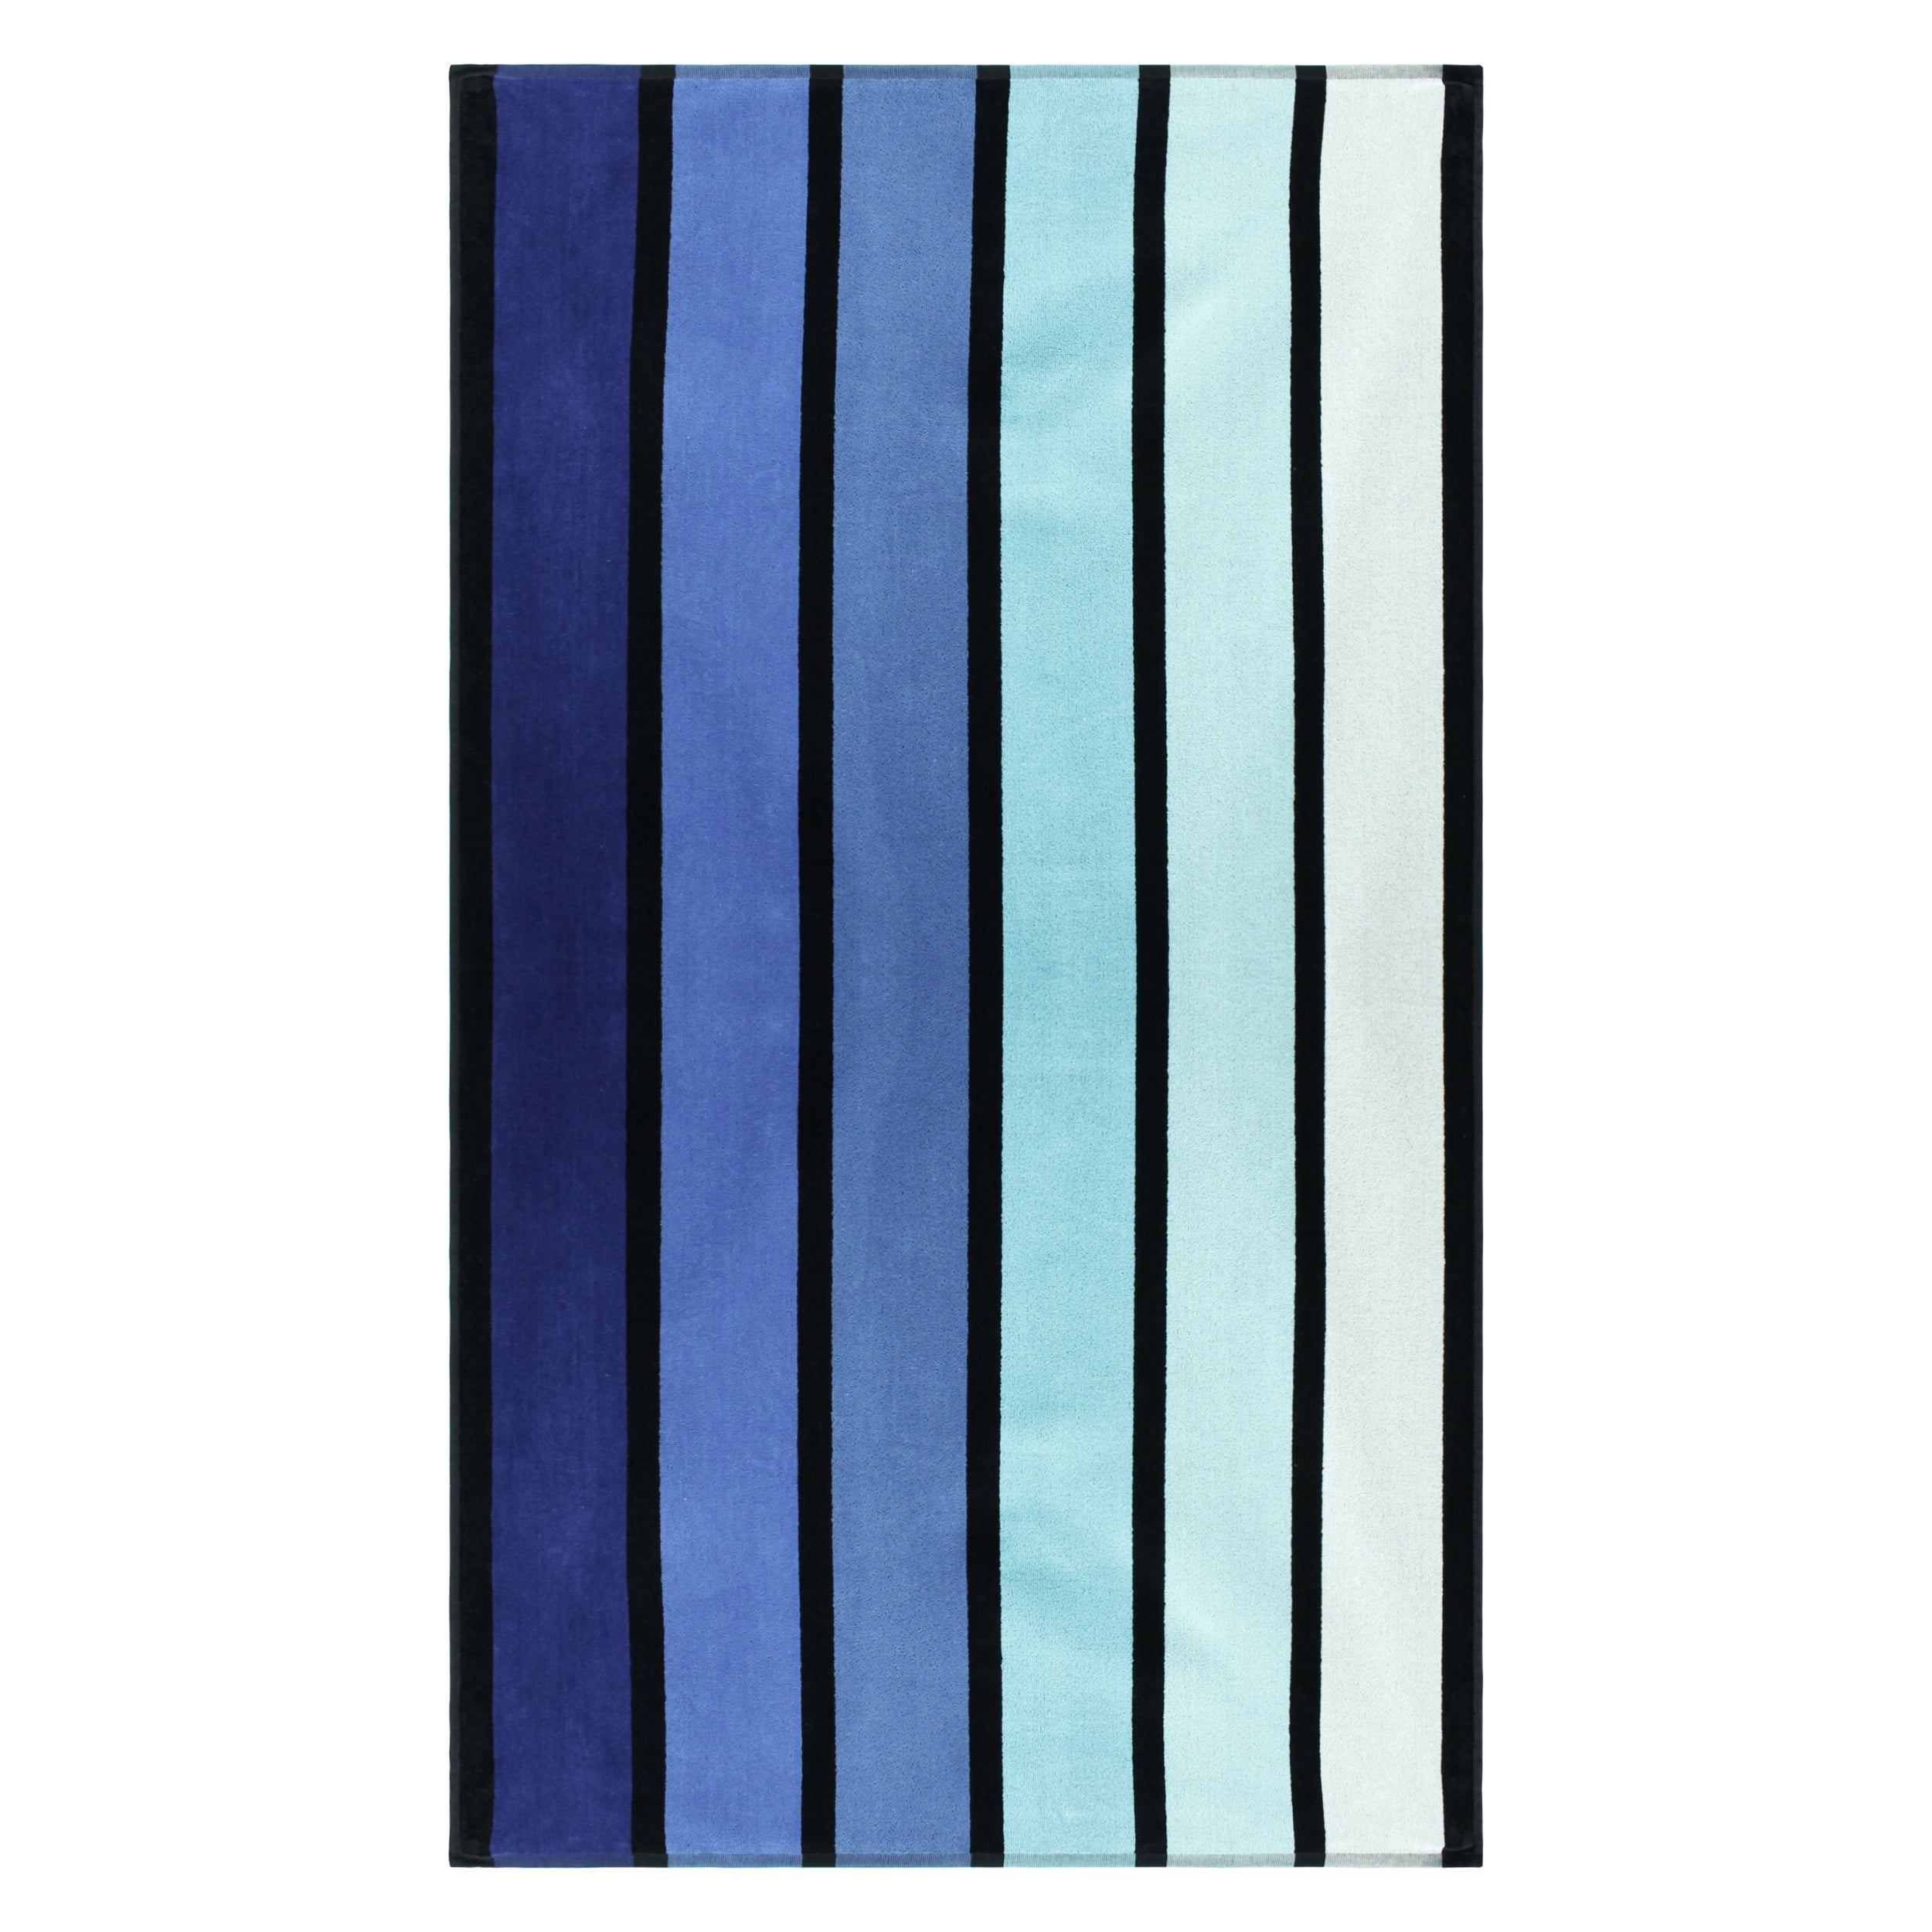 New 100% Cotton Soft Pool Beach Towel Blue and White Stripe 70x150cm 420gsm 